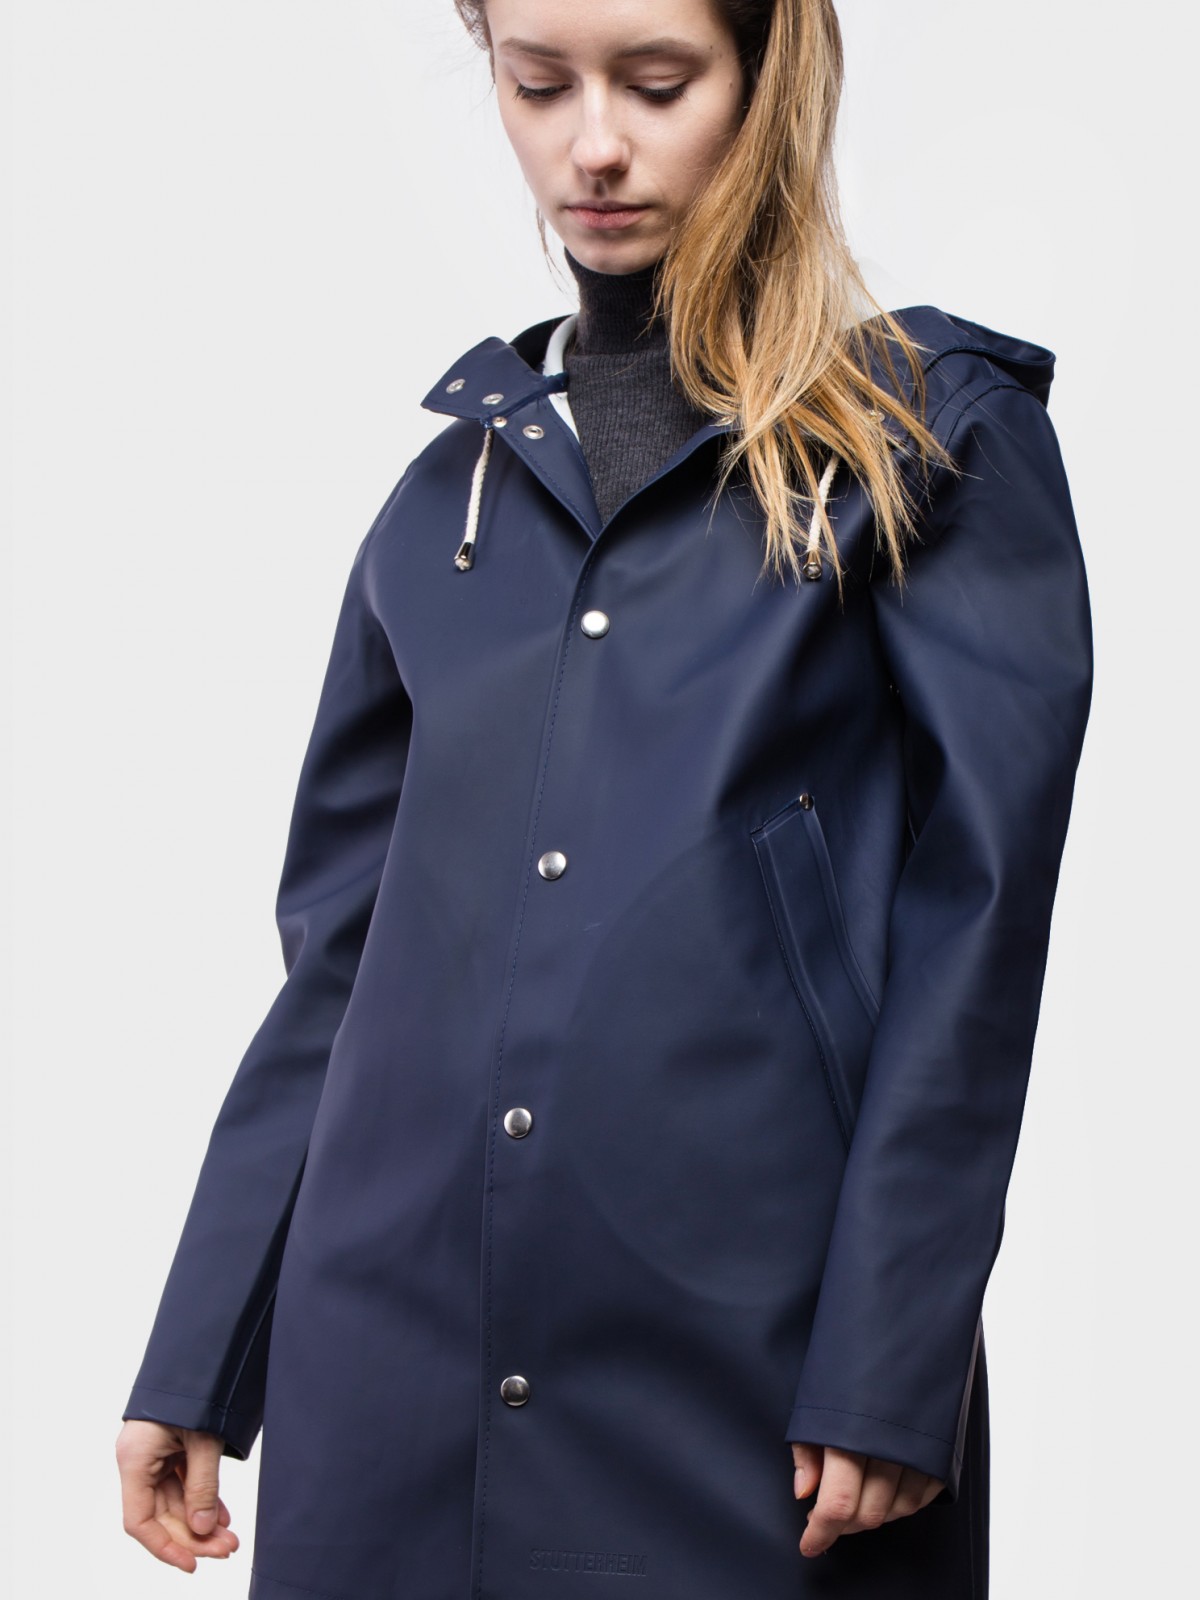 Moseback Raincoat in Navy - Stutterheim | Afura Store